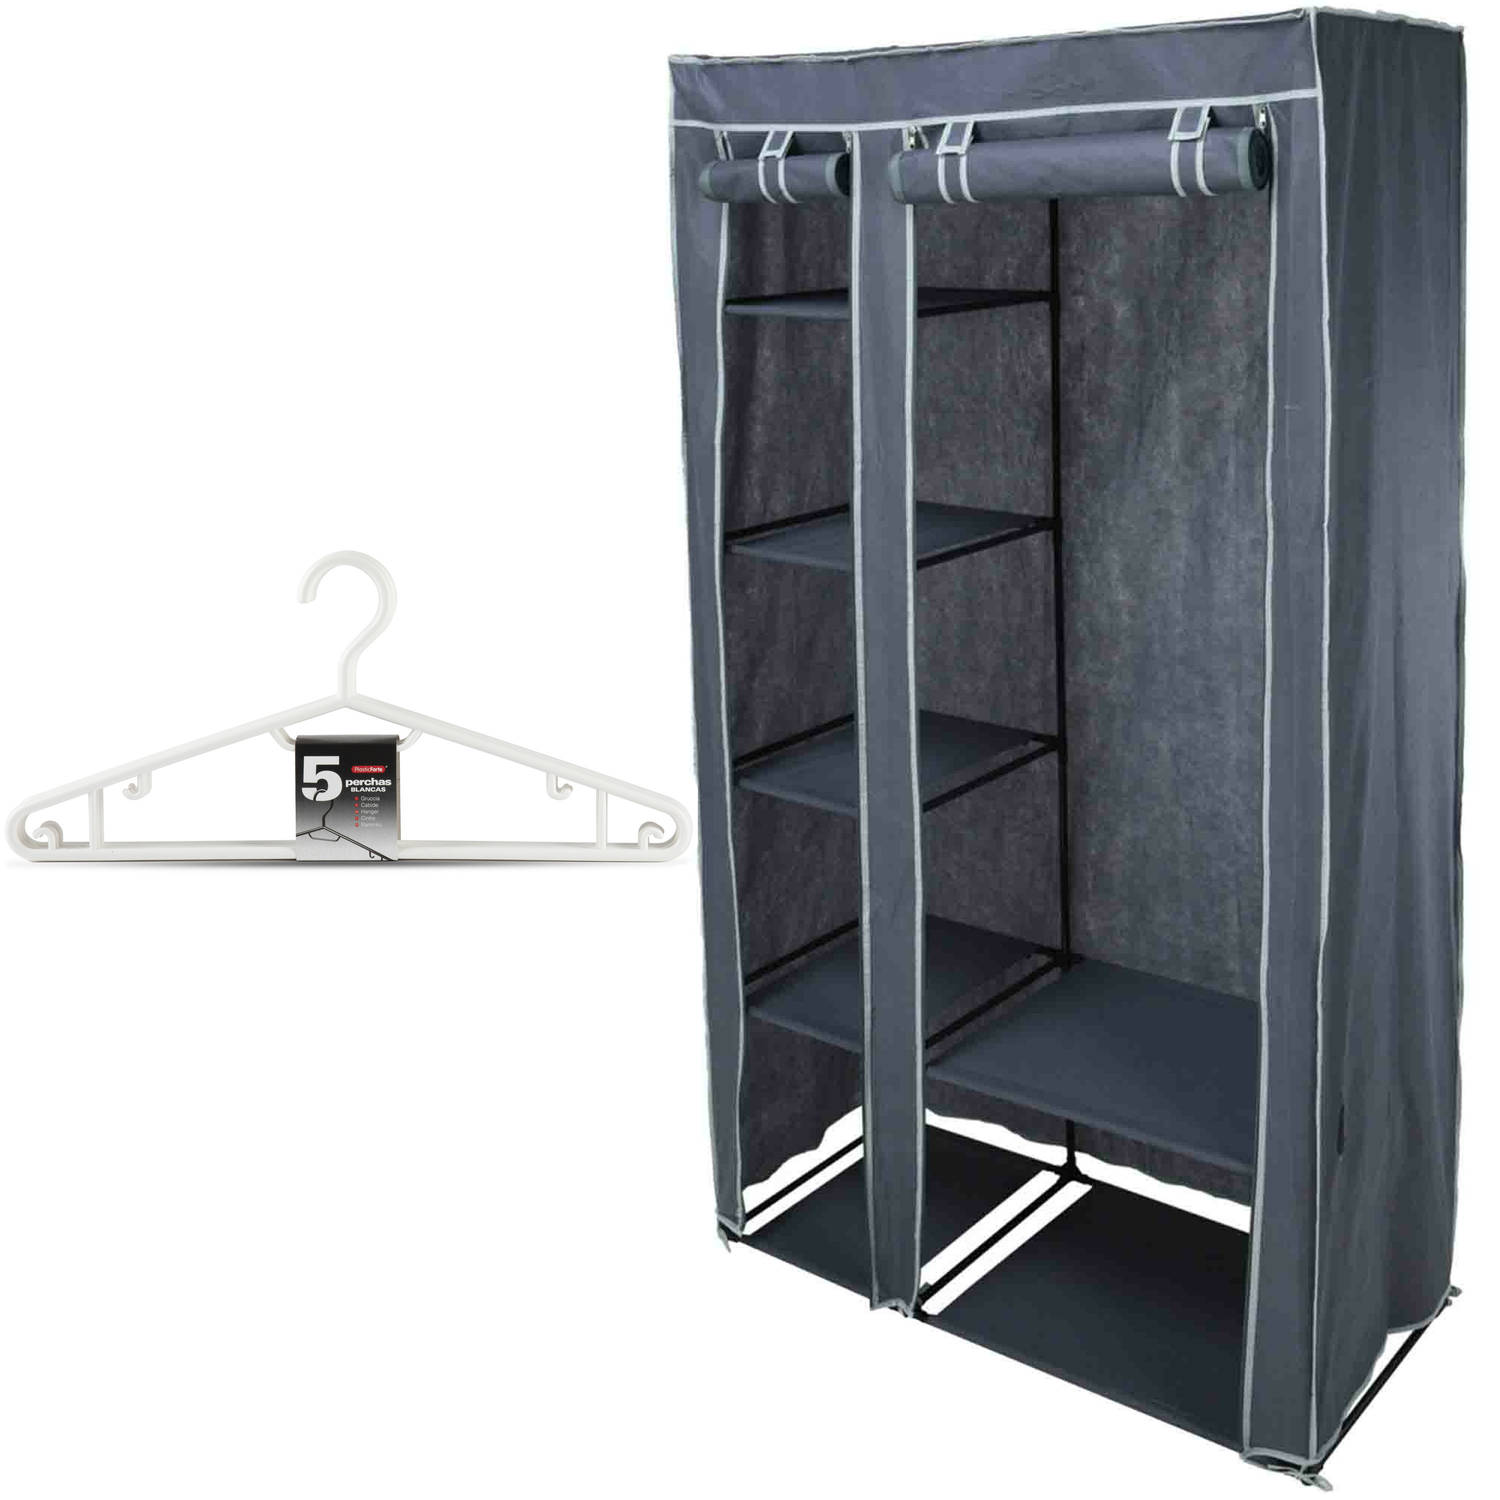 Mobiele kledingkast-garderobekast incl 10x hangers opvouwbaar grijs 174 cm Campingkledingkasten